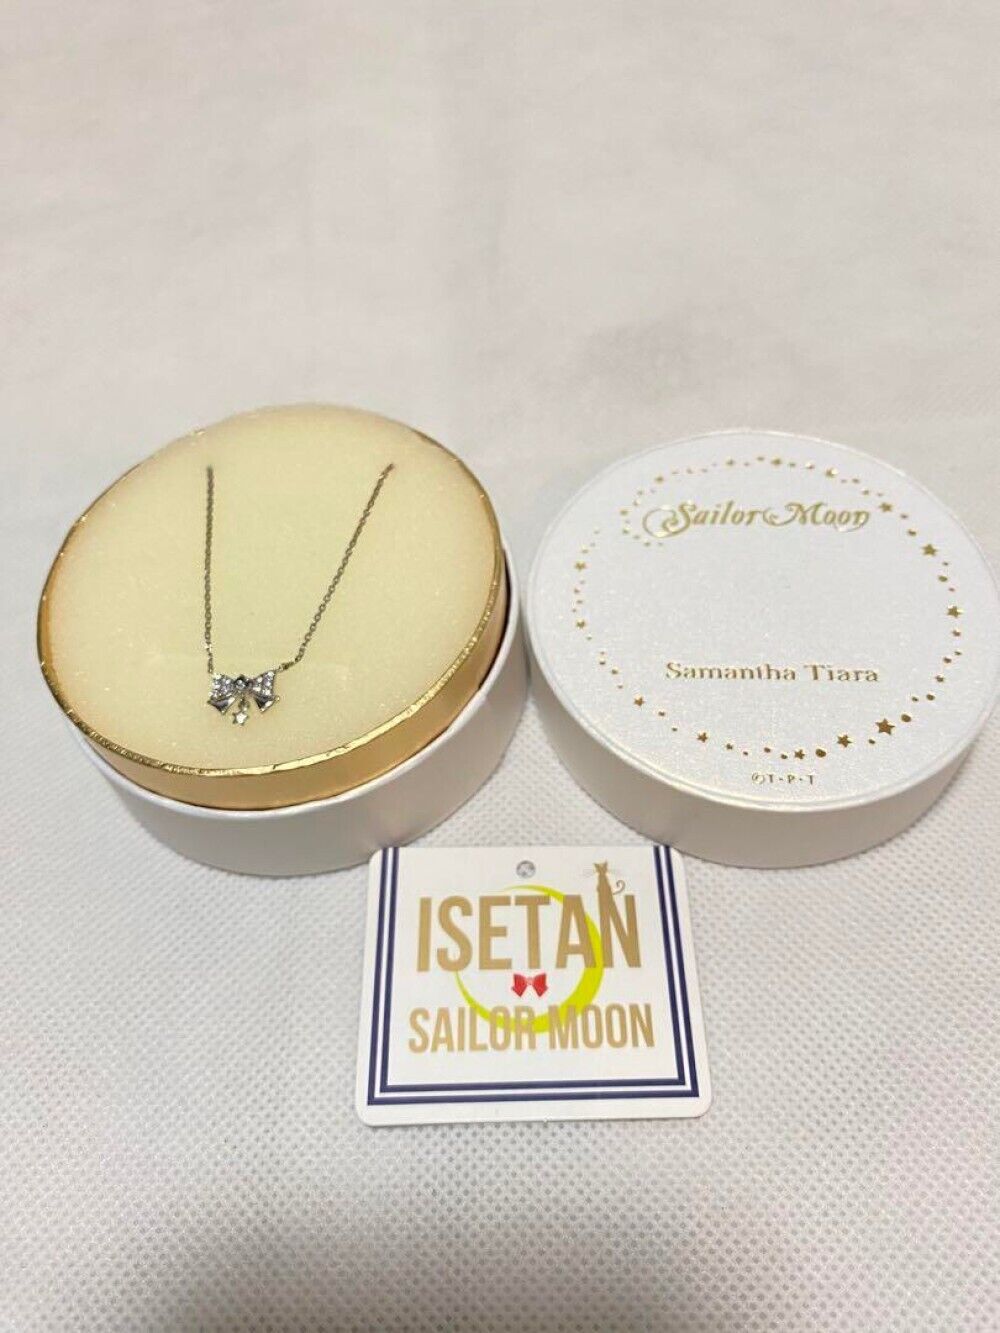 Samantha tiara sailor moon ribbon necklace Accessory Pendant With box ISETAN